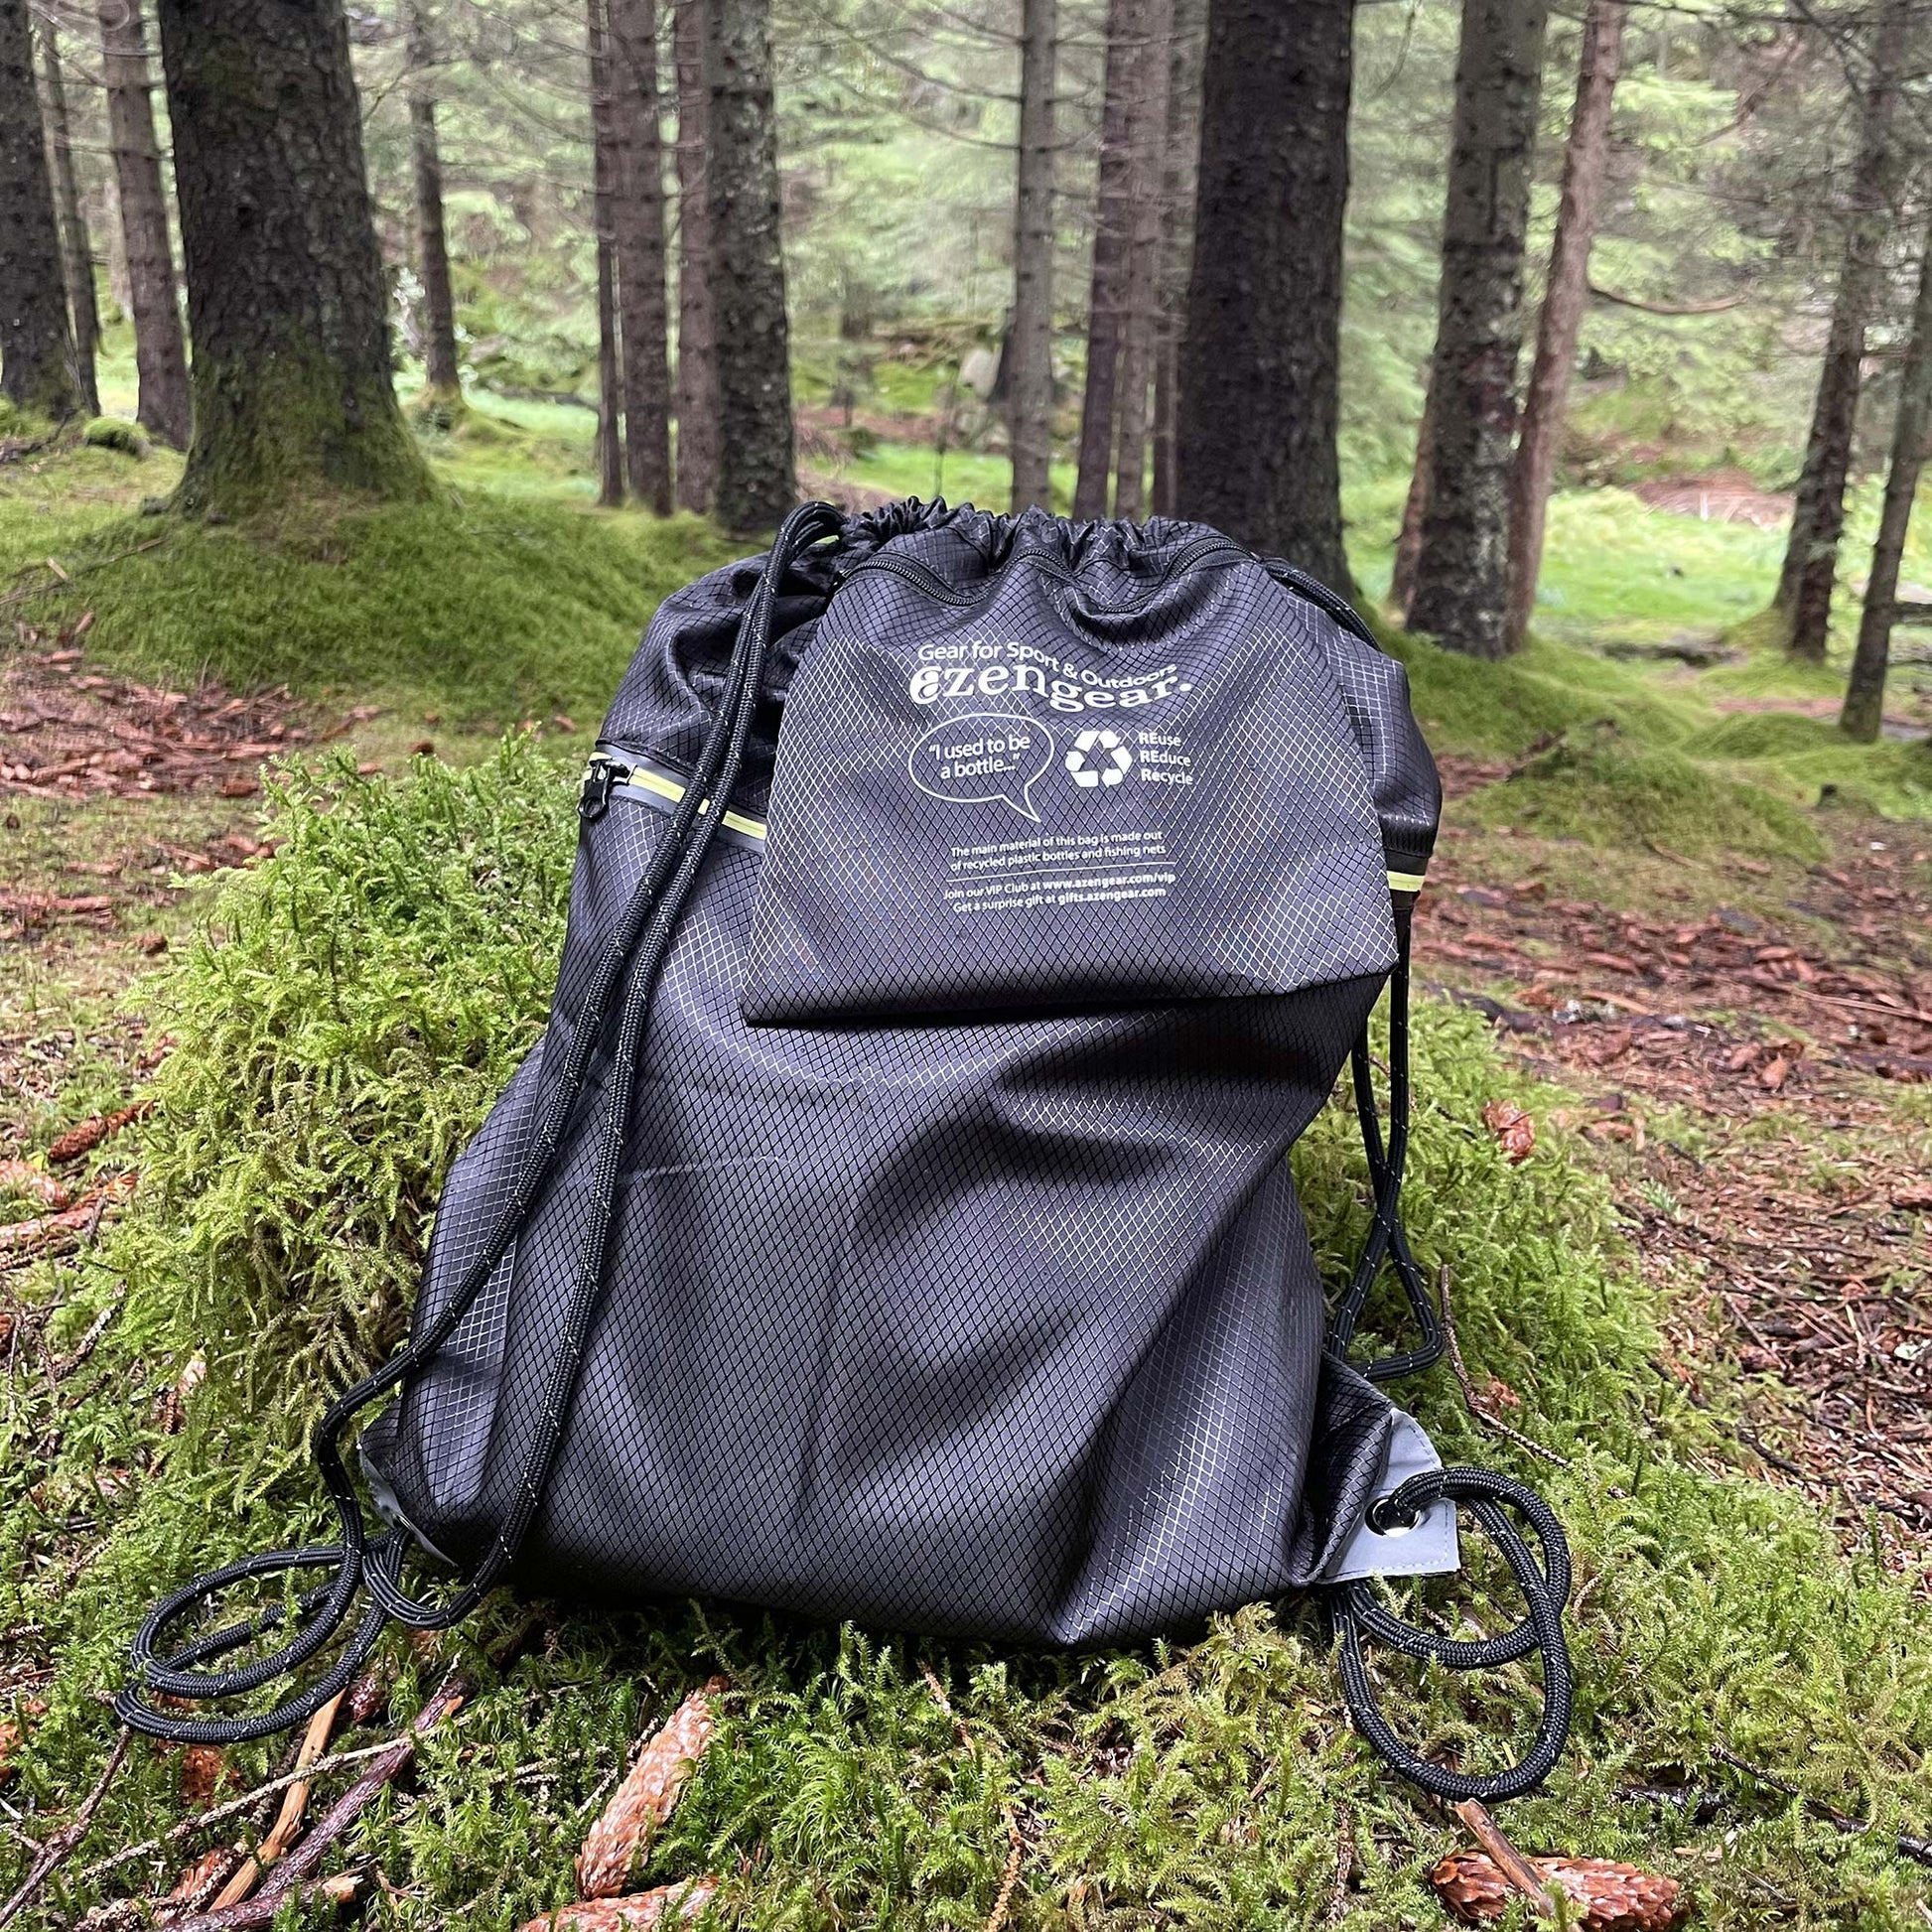 Drawstring Gym Bag from Waterproof Recycled Polyester - Rucksack for Sport, PE, Swim, Beach, Yoga (Black) - aZengear